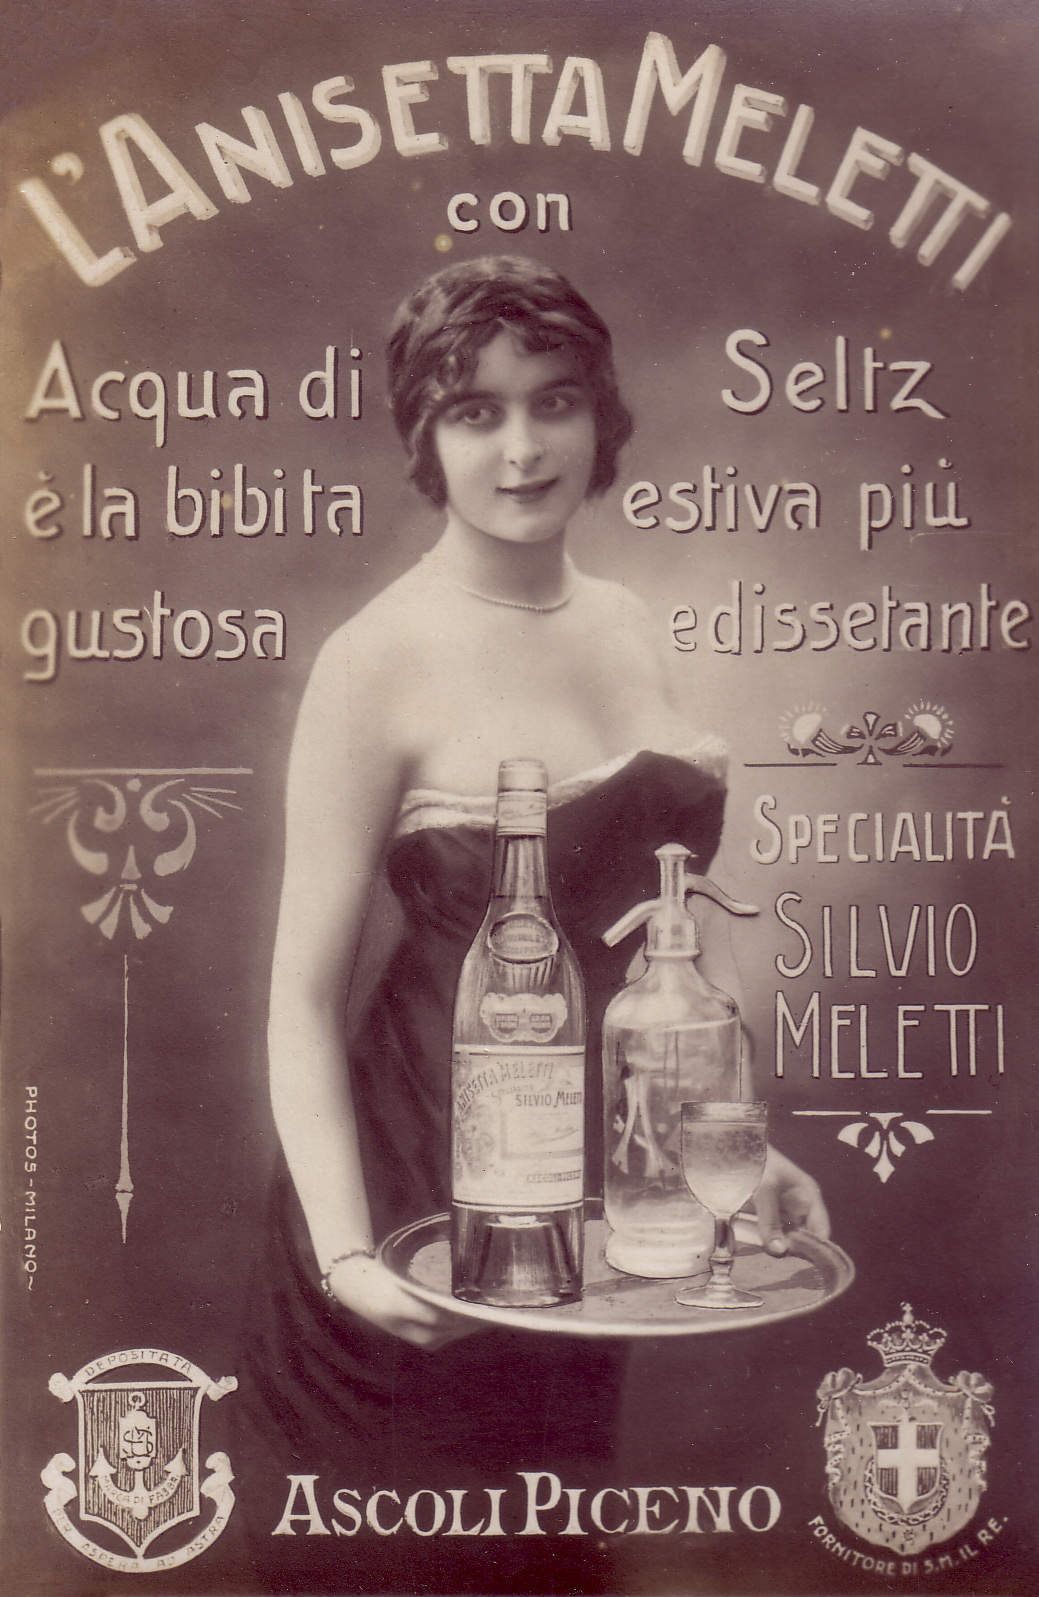 Anisette, a tasty liqueur worth indulging - Drink Italian